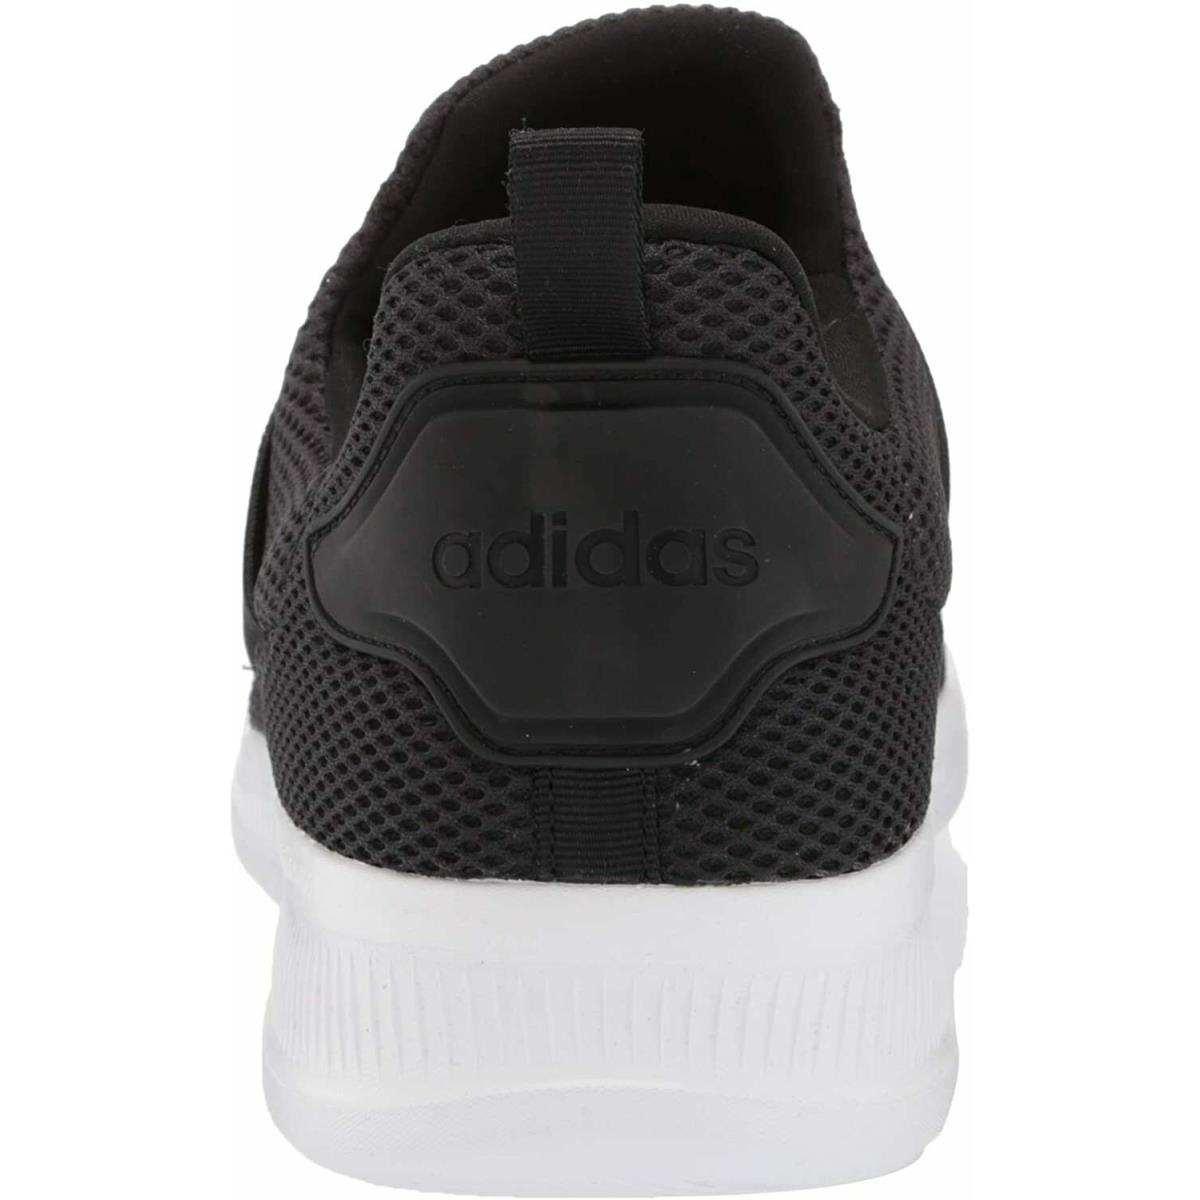 Adidas shoes Lite Racer - Black 1